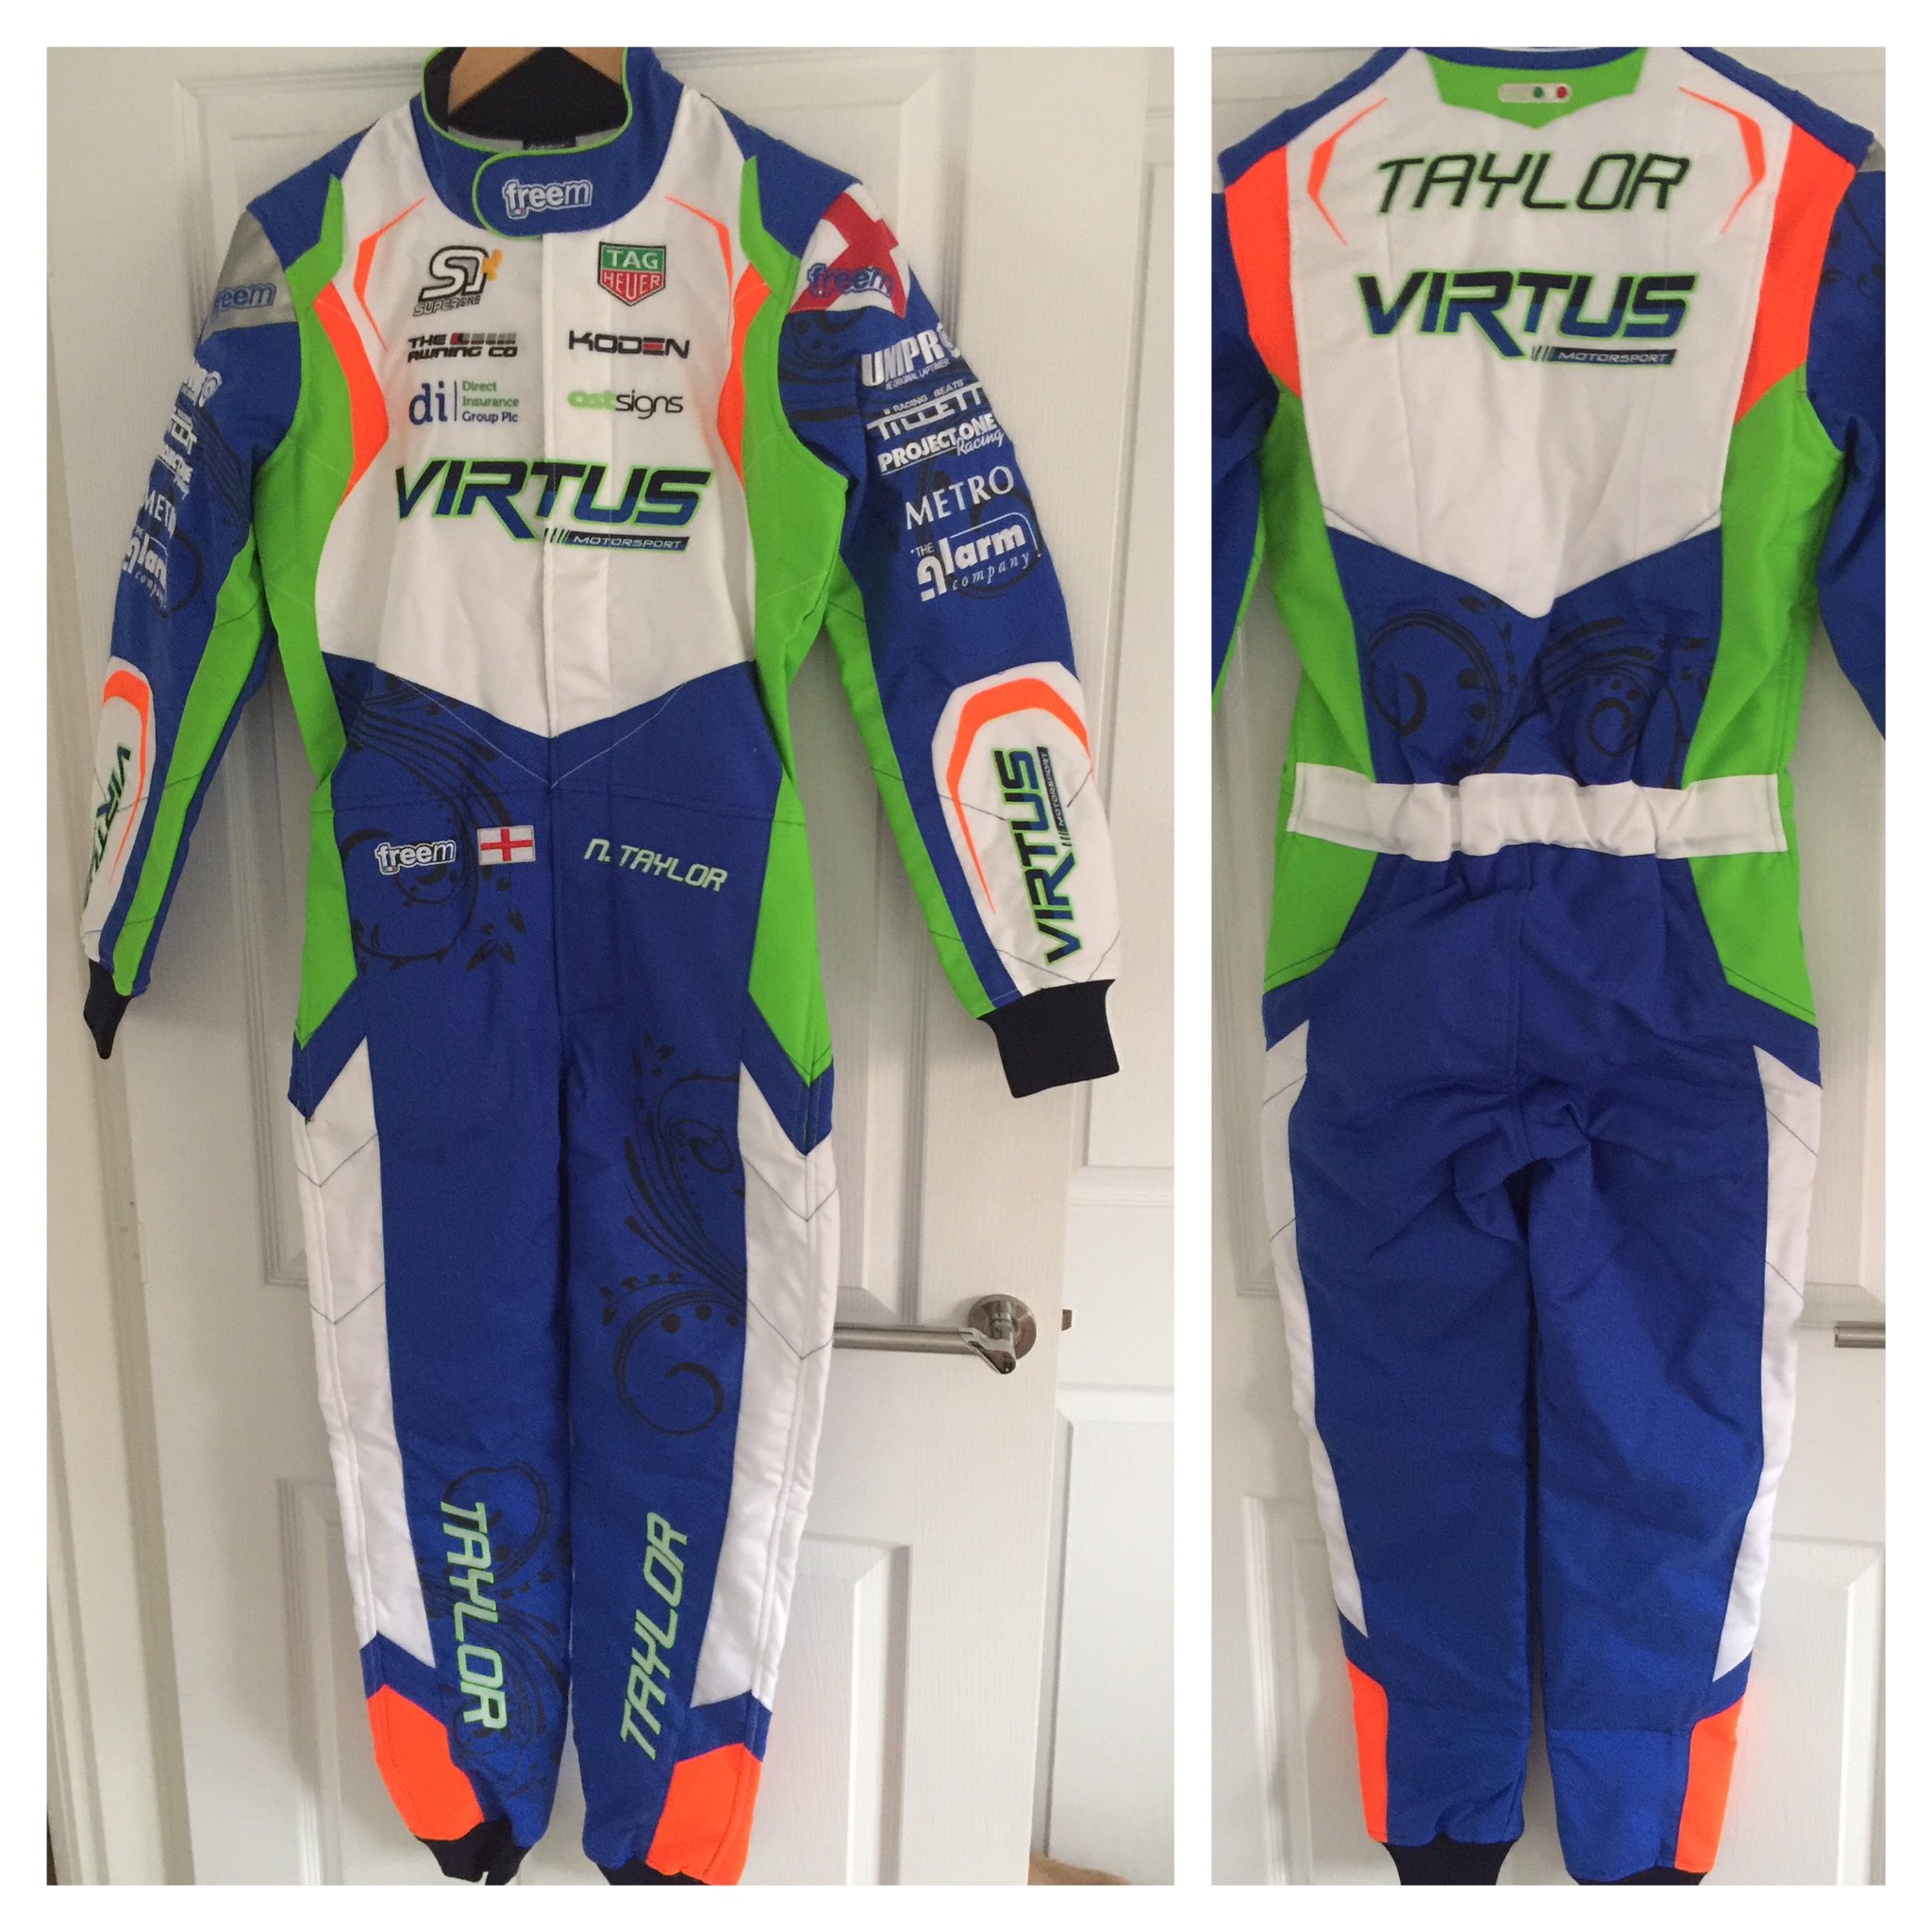 Voetzool Spectaculair Fluisteren Virtus Motorsport on X: "Another freem suit arrived today. Big thanks to  @FreeMUK &amp; @mdm_designs #virtus #freem #fluro #taylor @nicksterepic  @RichardTaylor__ https://t.co/8JSL7gnPoB" / X